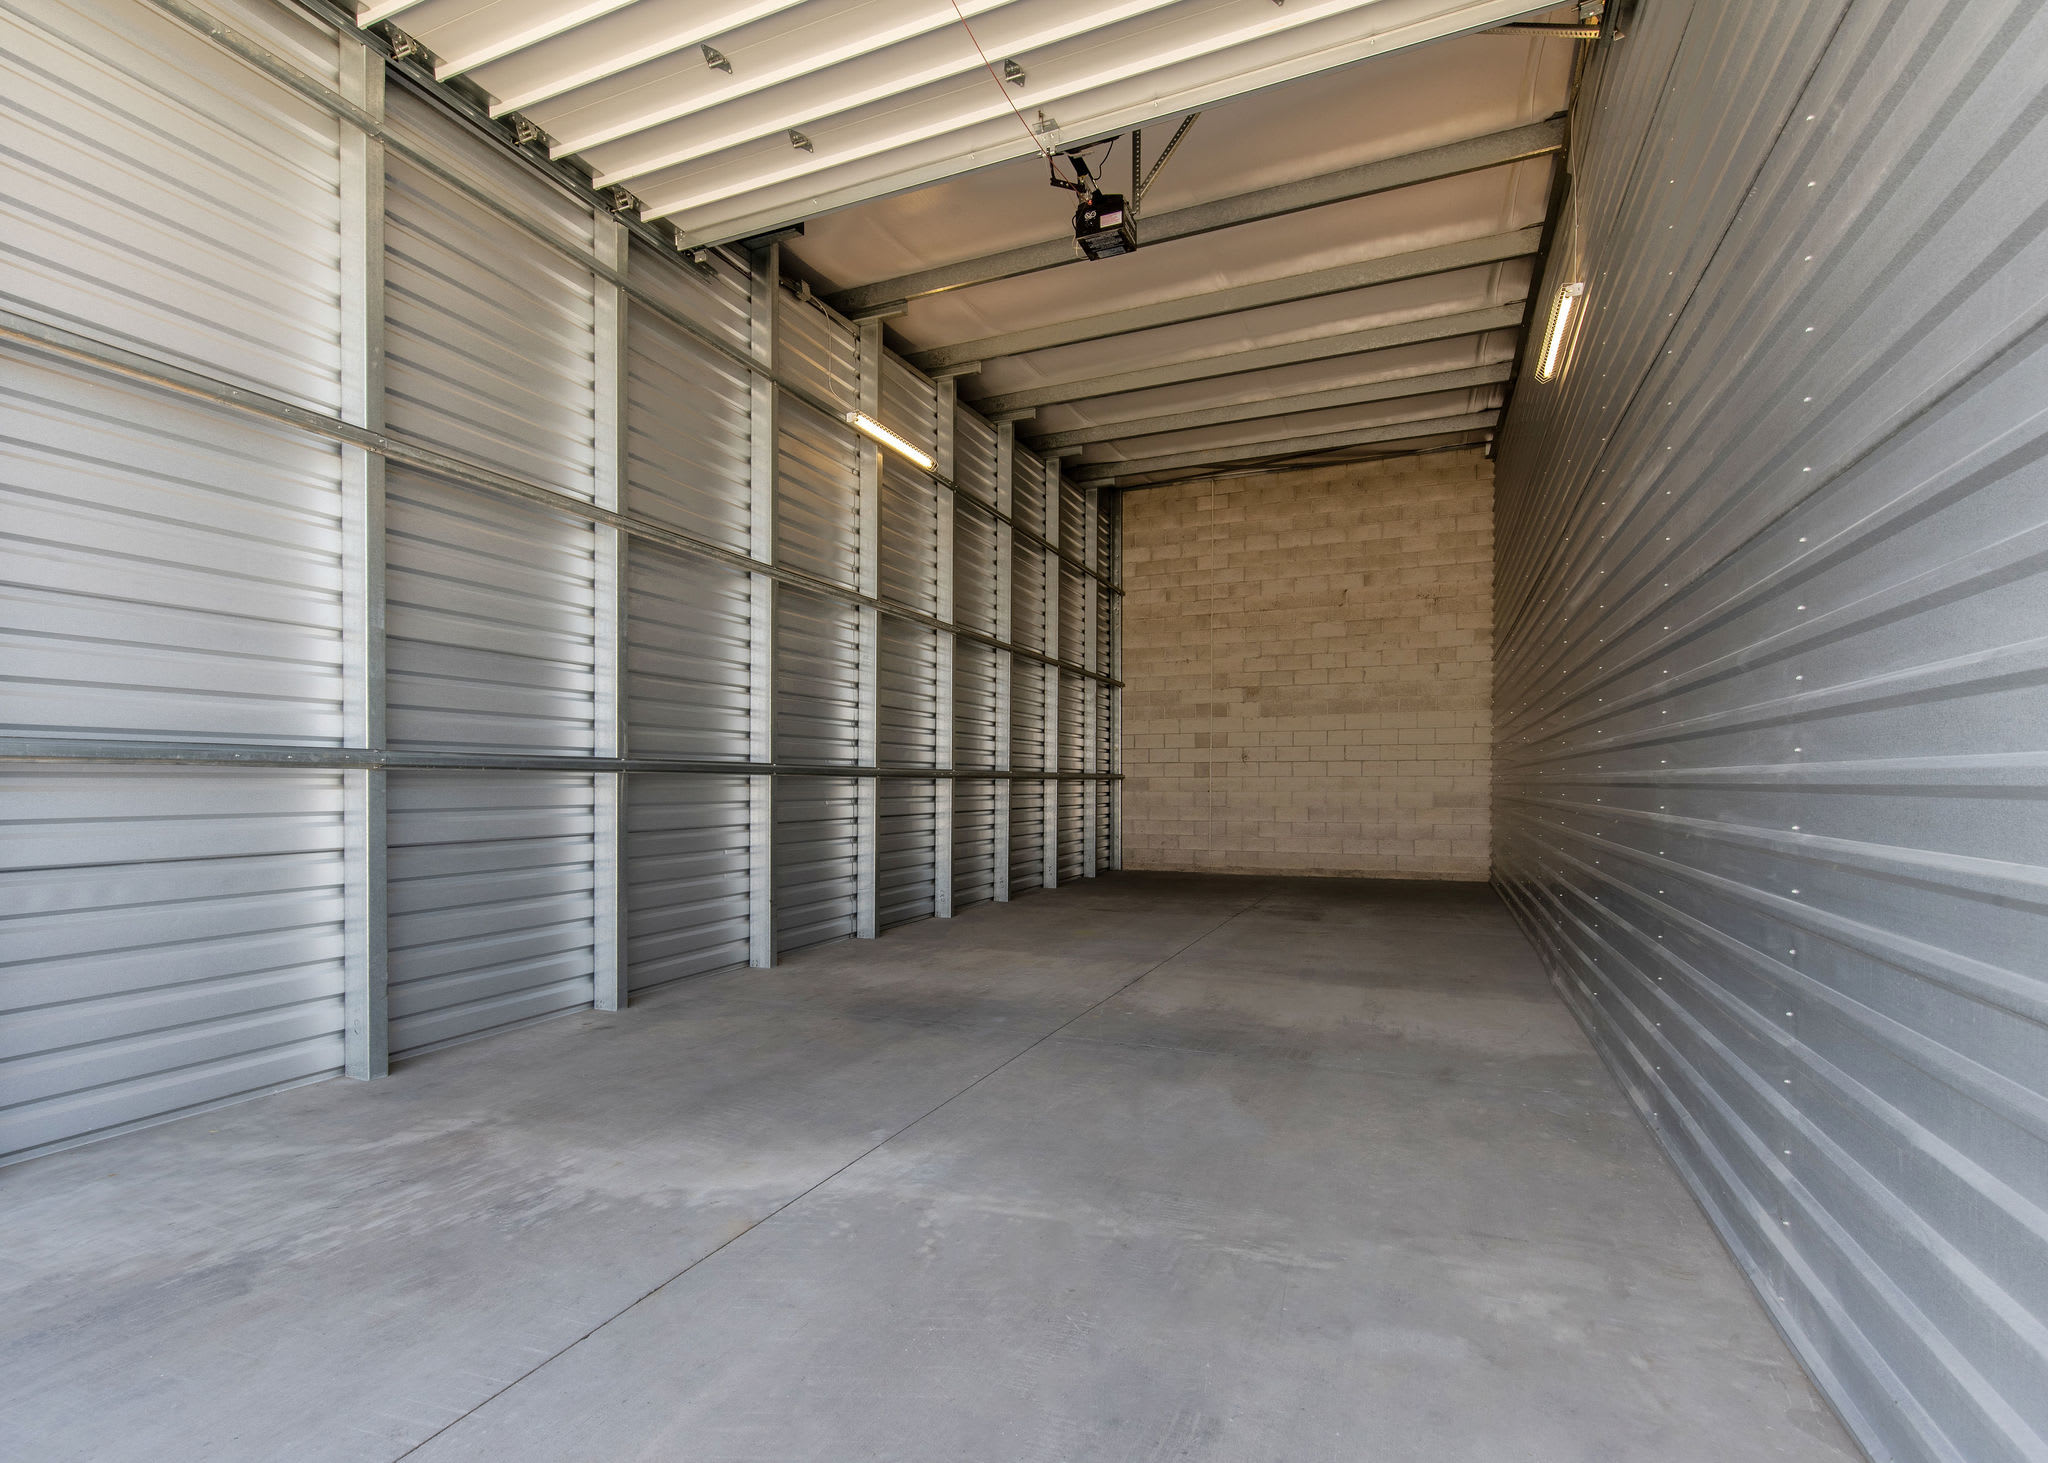 Doorway to units at Stor'em Self Storage in Salt Lake City, Utah